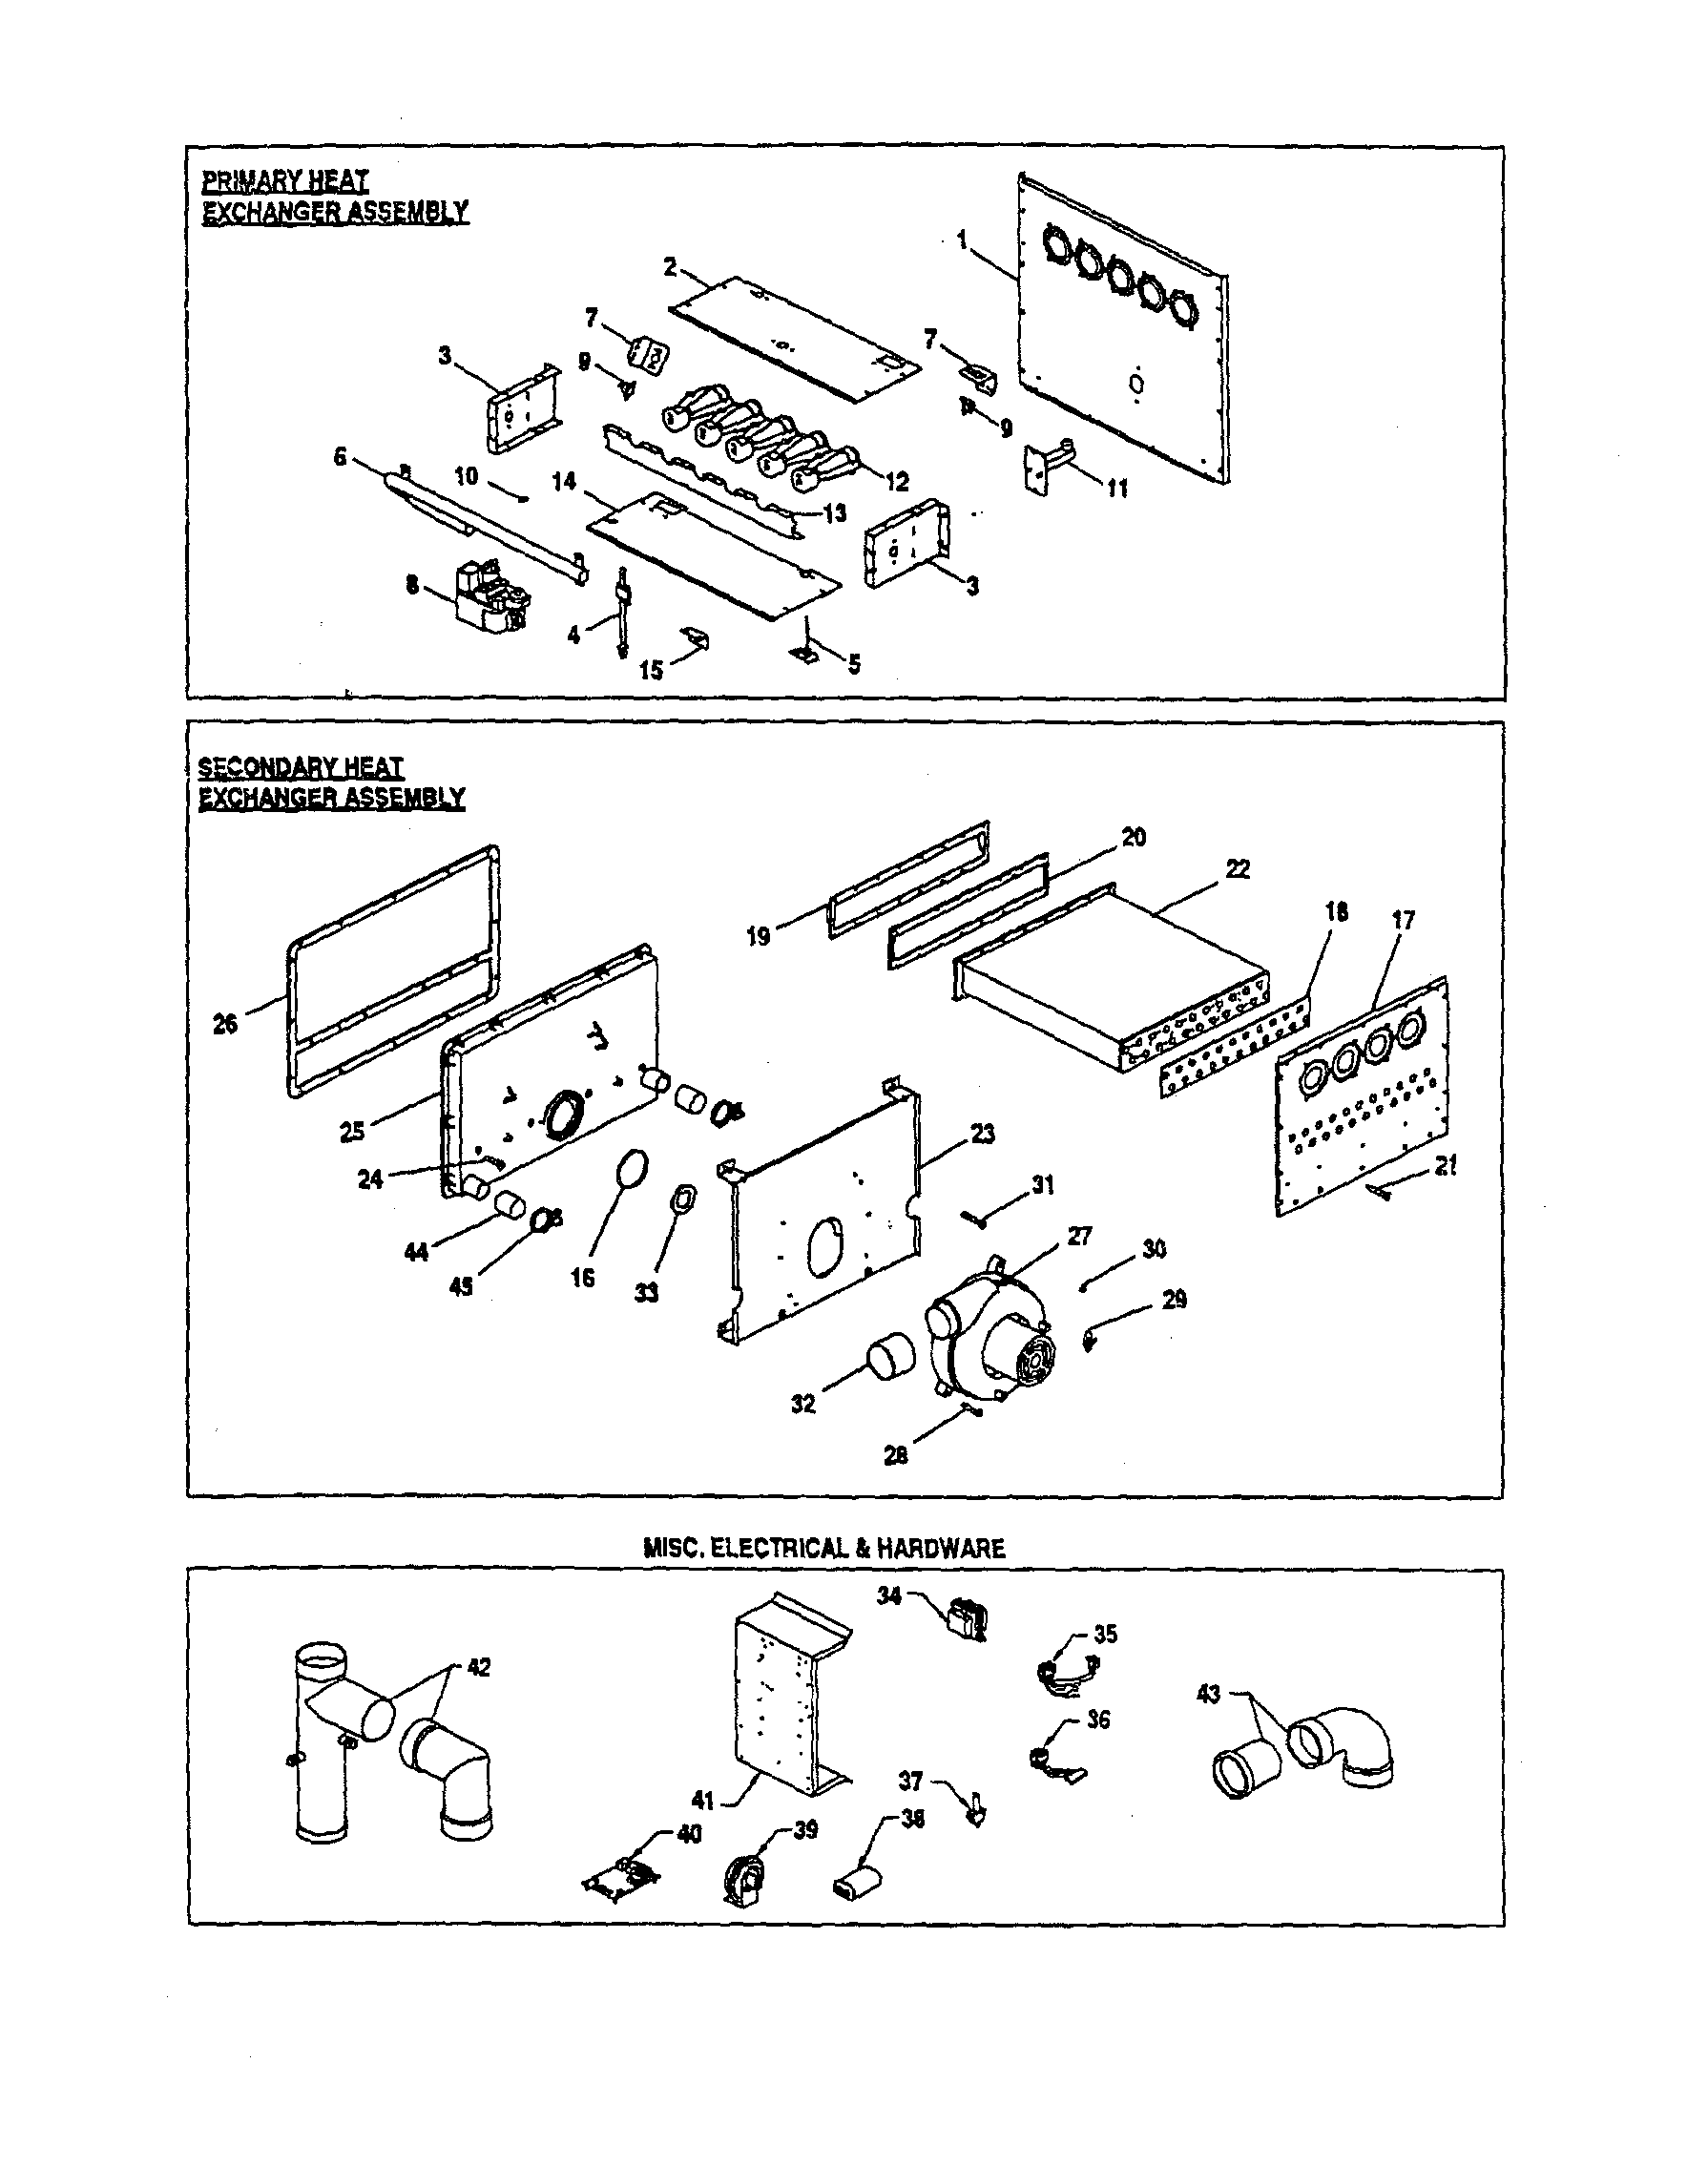 Wiring Diagram Of Window Air Conditioner